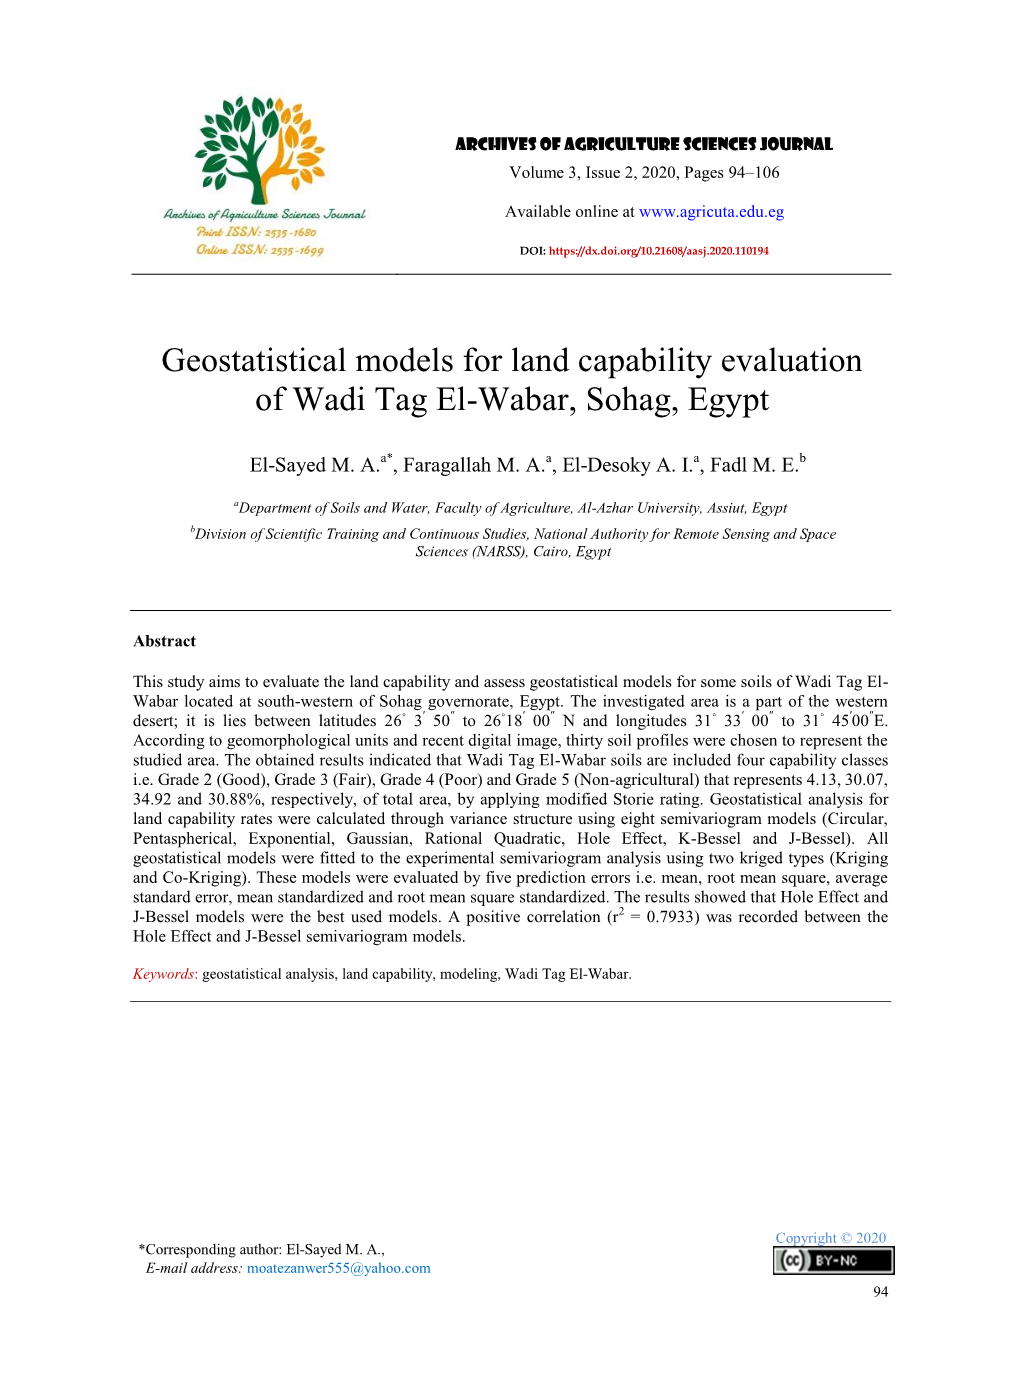 Geostatistical Models for Land Capability Evaluation of Wadi Tag El-Wabar, Sohag, Egypt